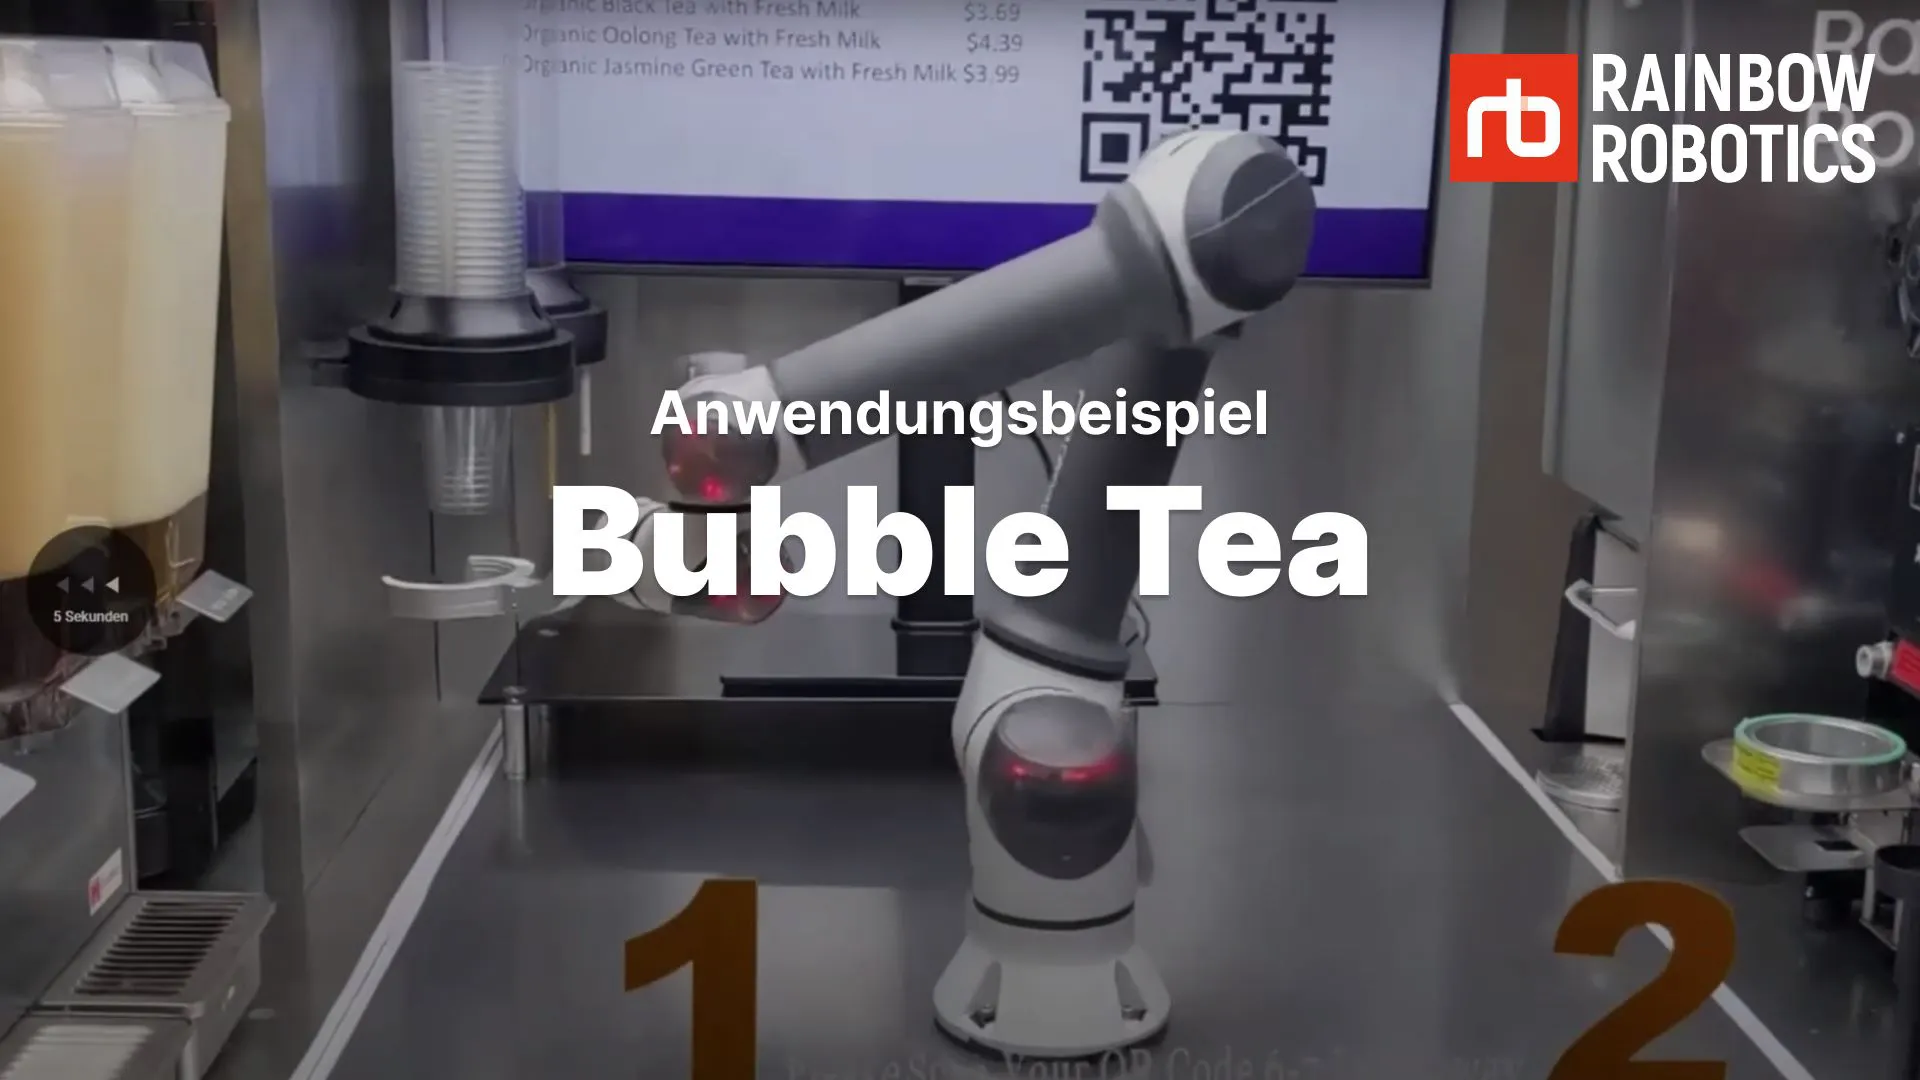 Thumbnail of Bubble Tea example application of Rainbow Robotics Cobots